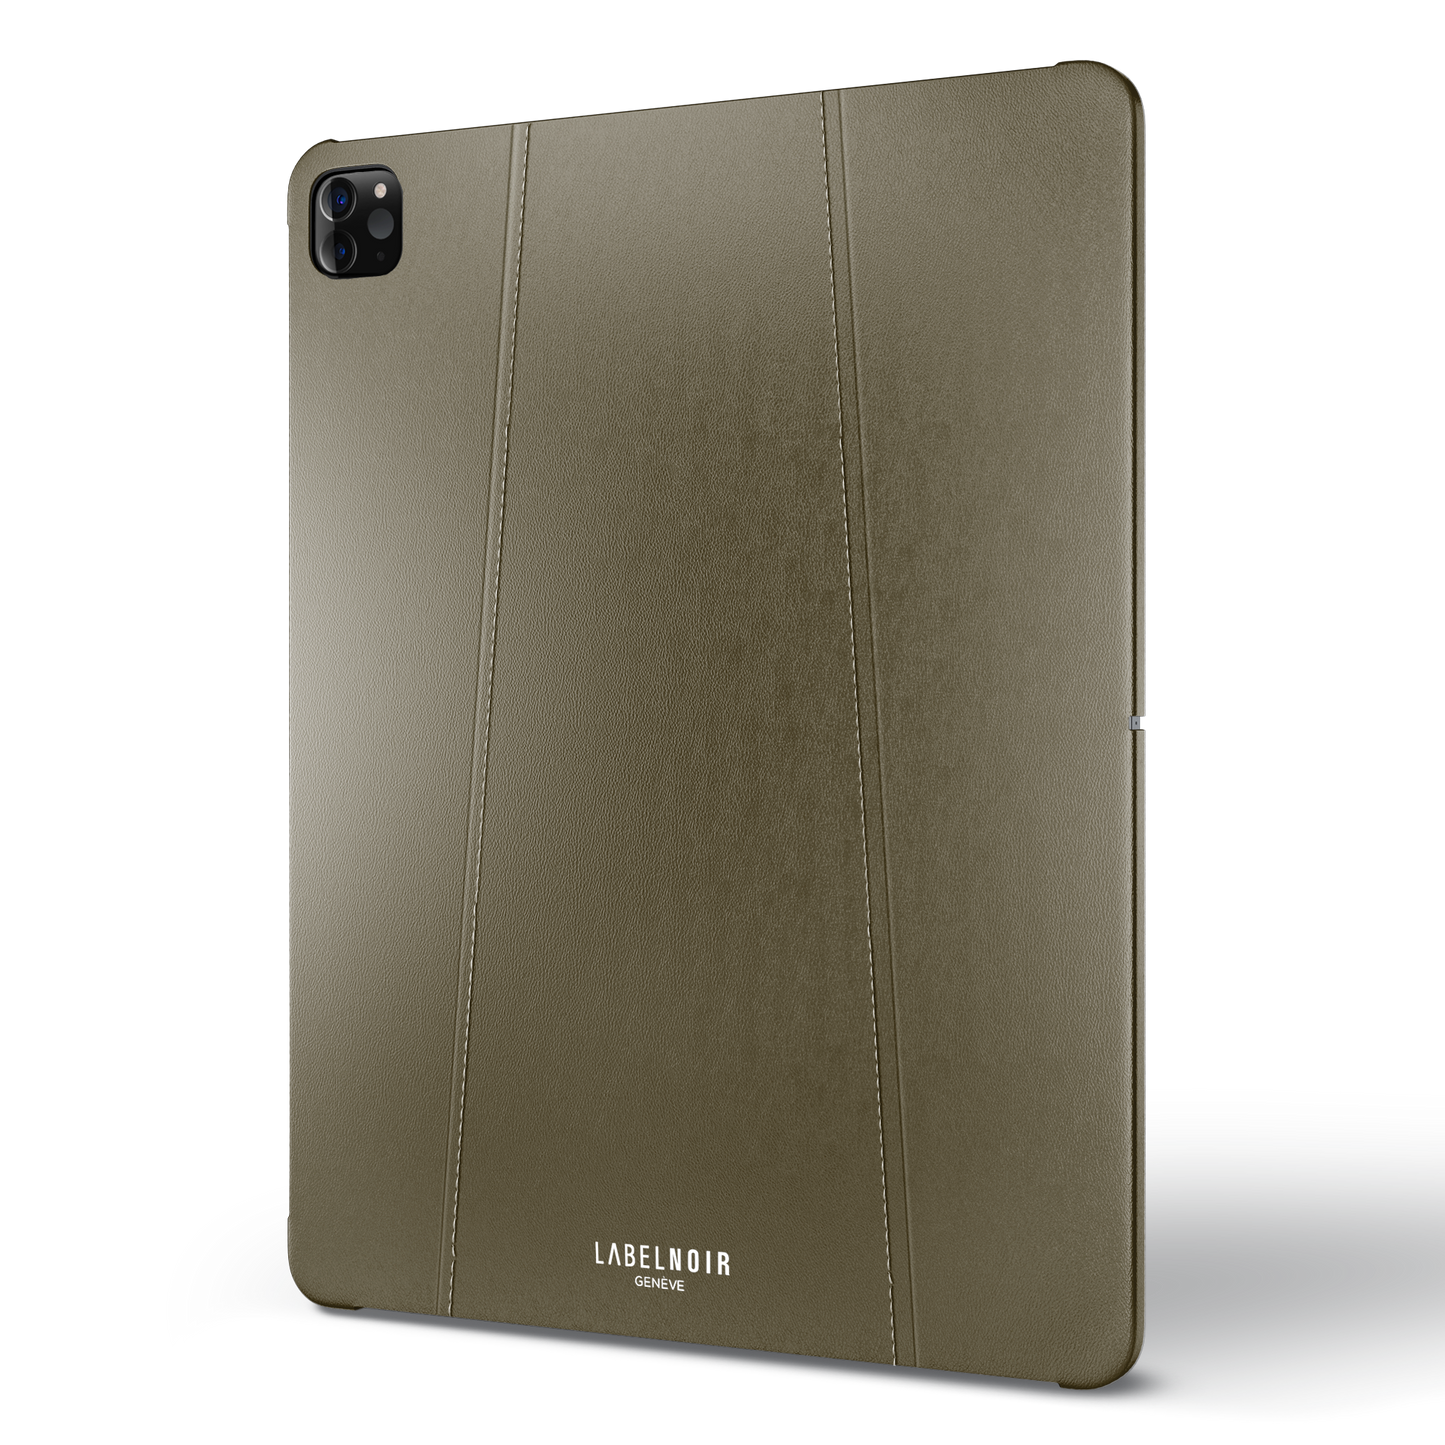 Ipad Pro (6th Gen) 12.9-inch Kaki Leather Case